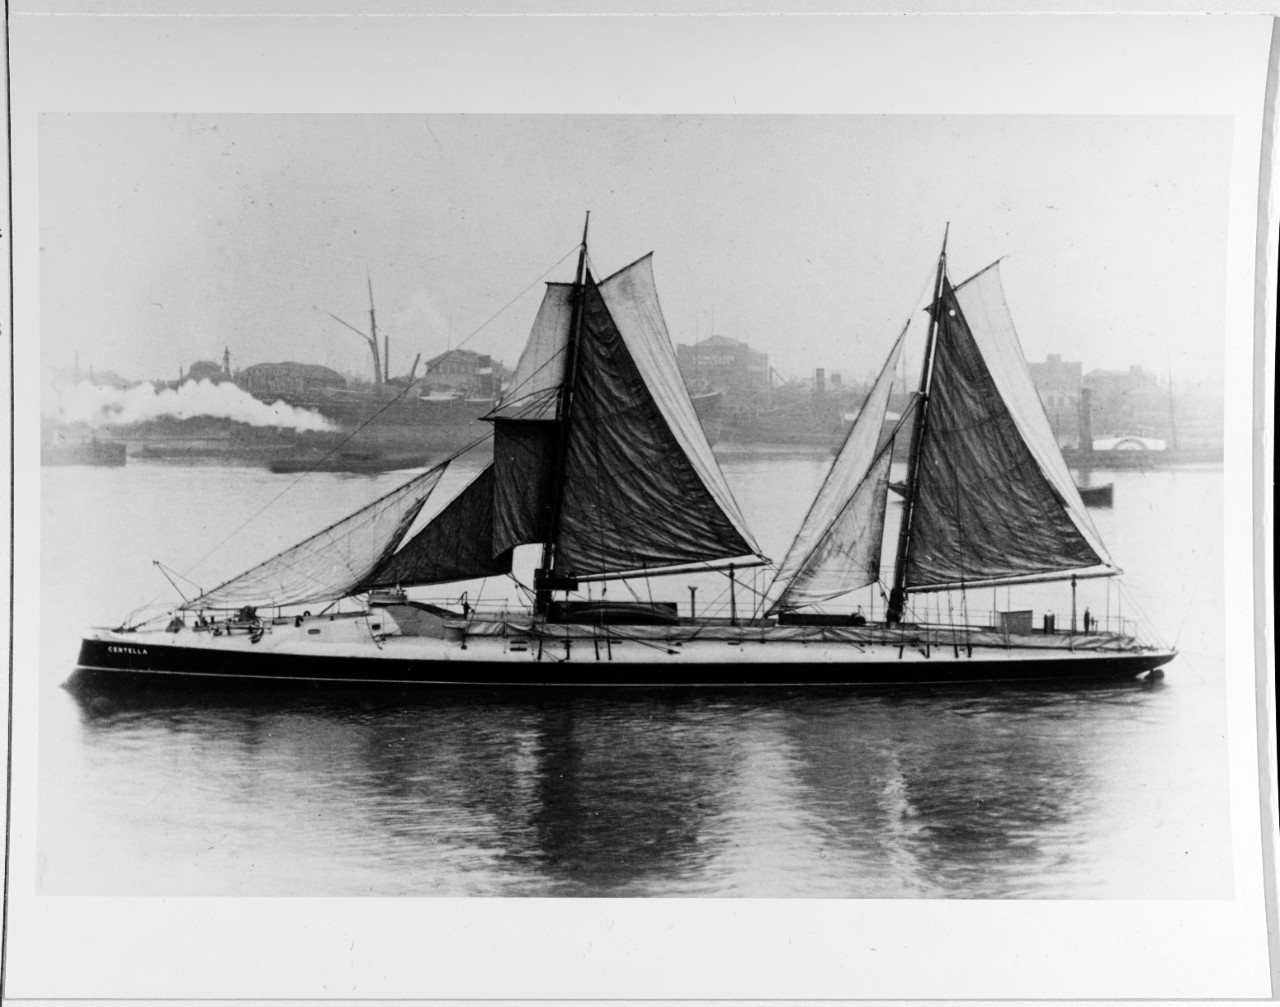 Argentine torpedo boat CENTELLA, built by Yarrow in 1882.